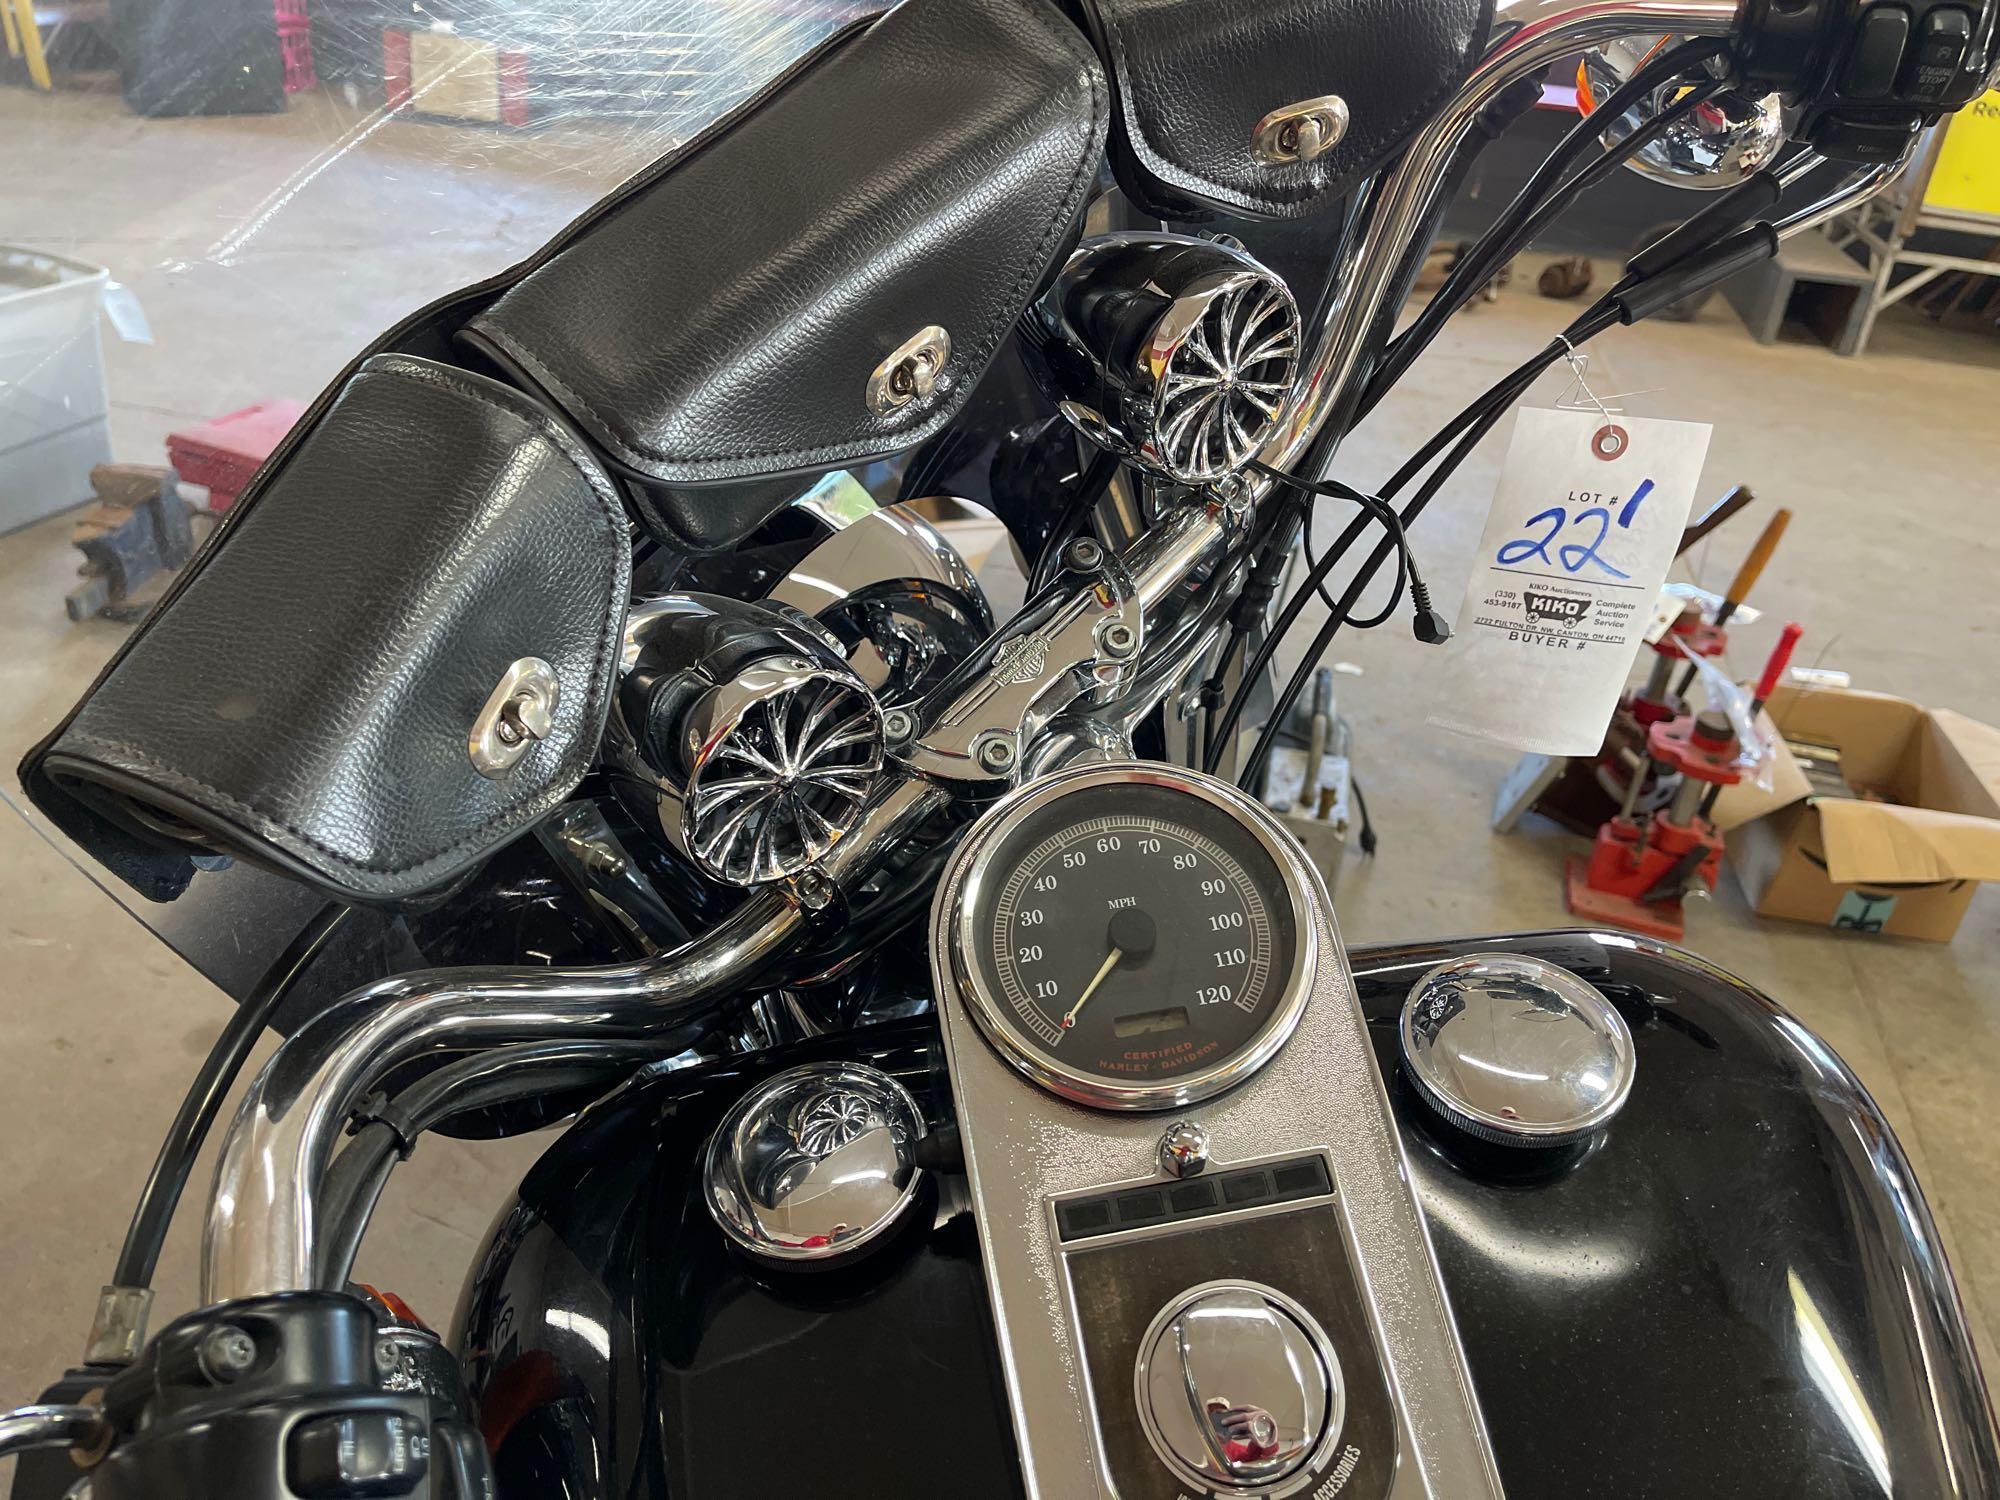 1999 Harley Davidson softail custom. Lots of upgrades. Runs. Odometer discrepancy, motorcycle shows